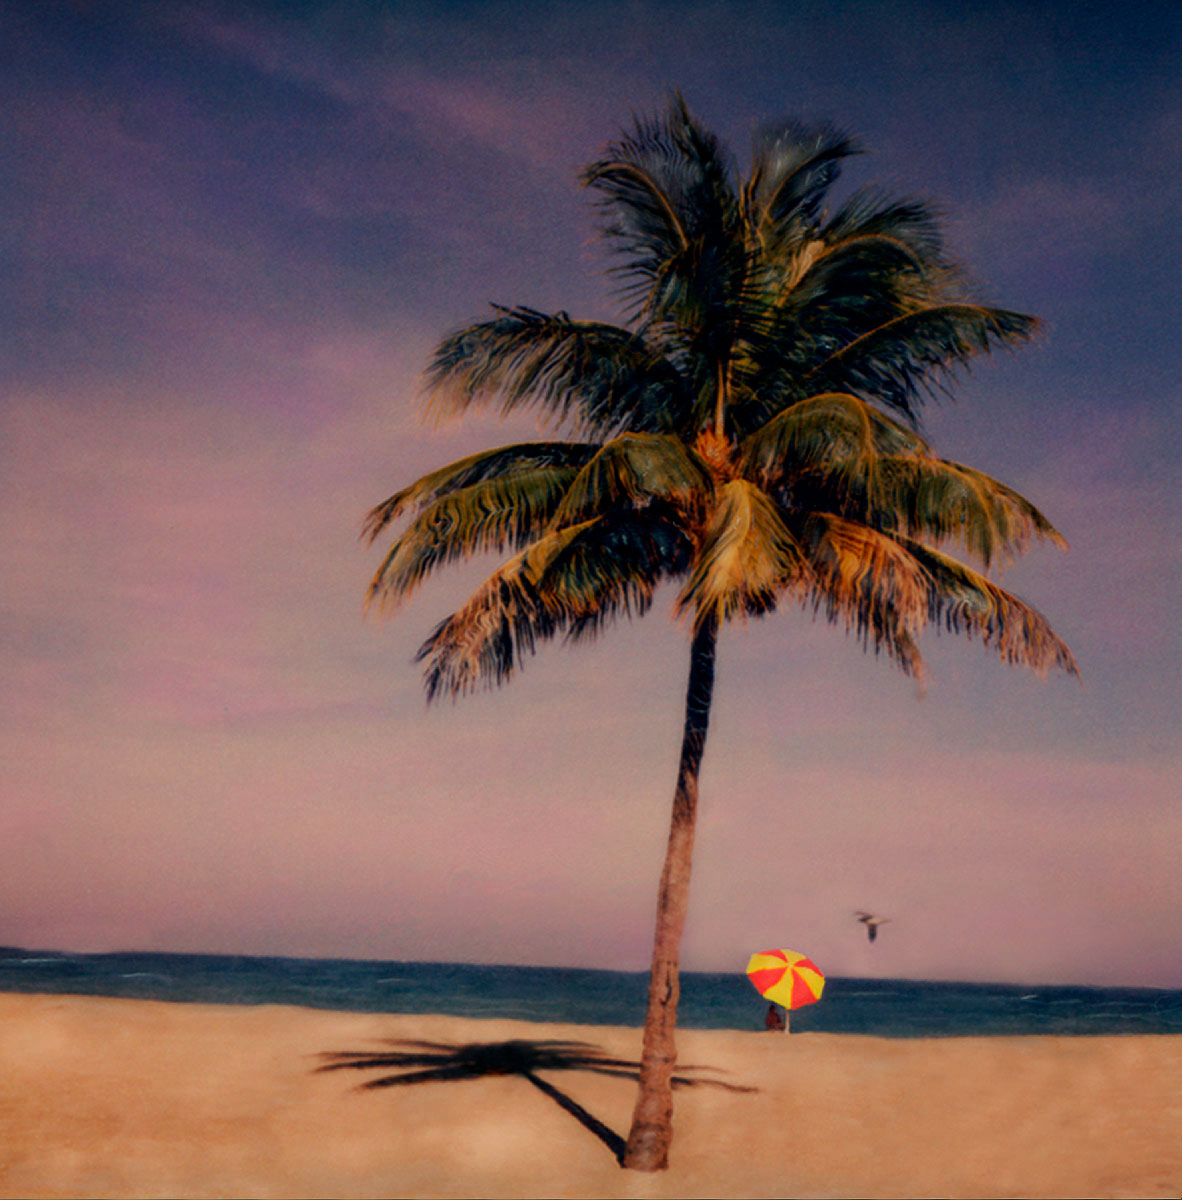 "Palm and Beach Umbrella" <br>Seascape with Palm and Red and Yellow Beach Umbrella, Haulover Beach, FL